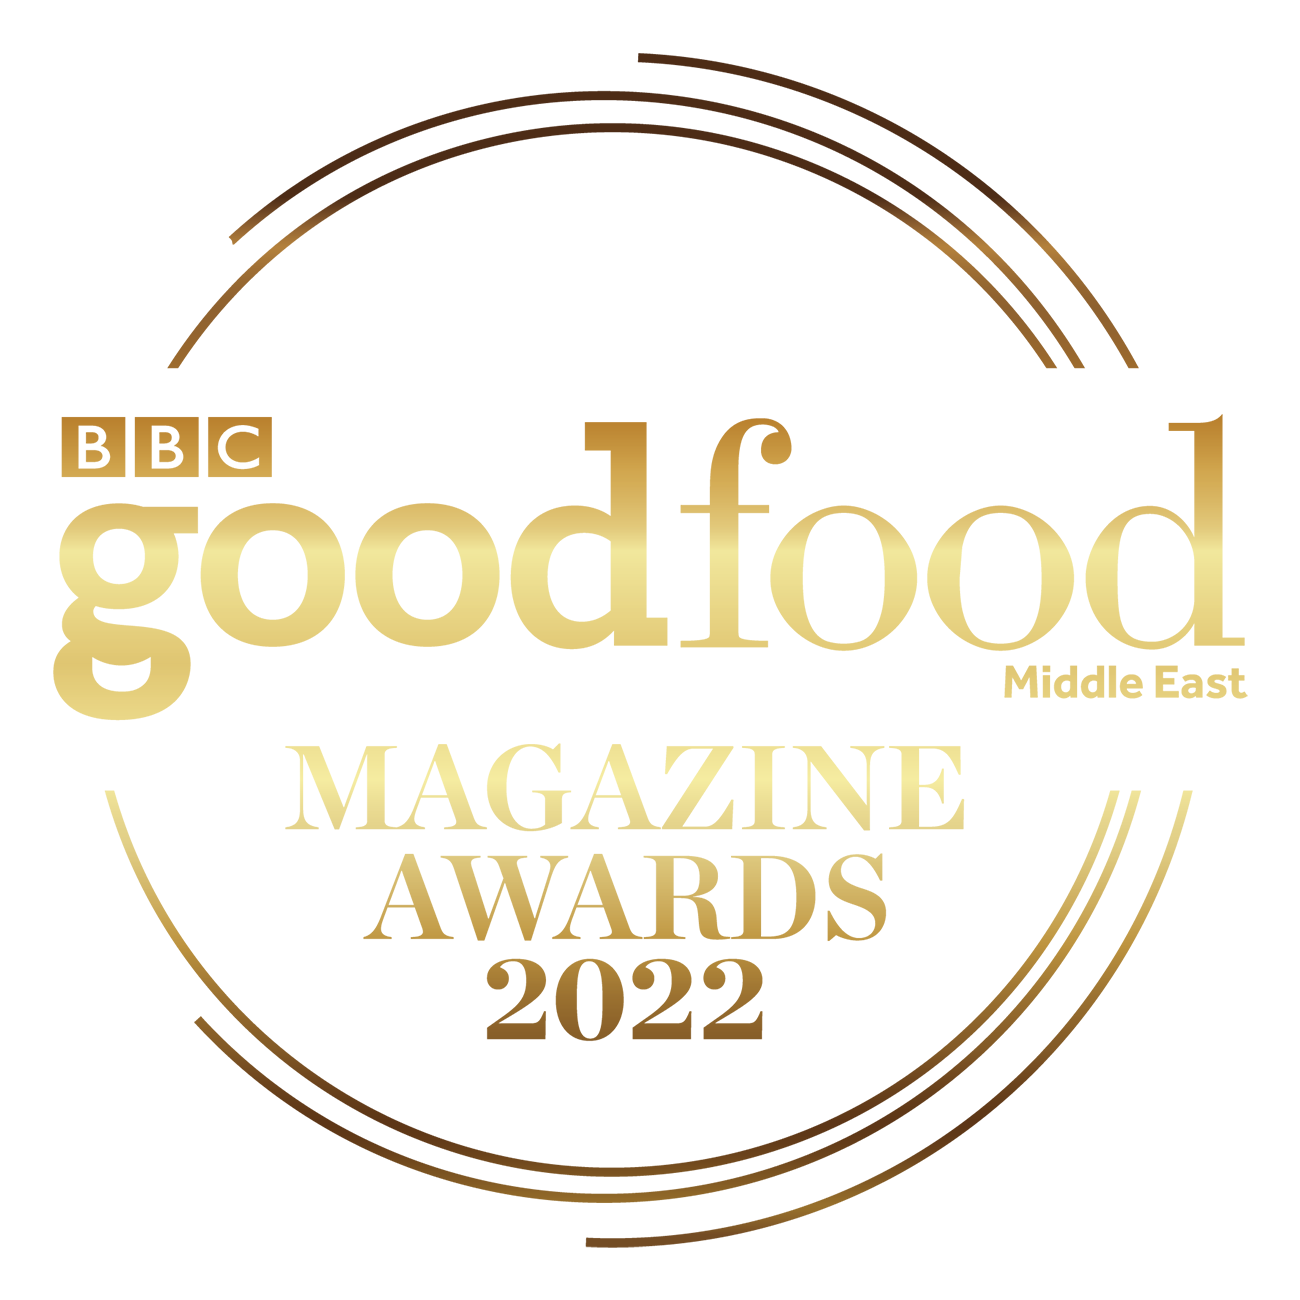 The BBC Good Food Middle East Magazine Awards 2022